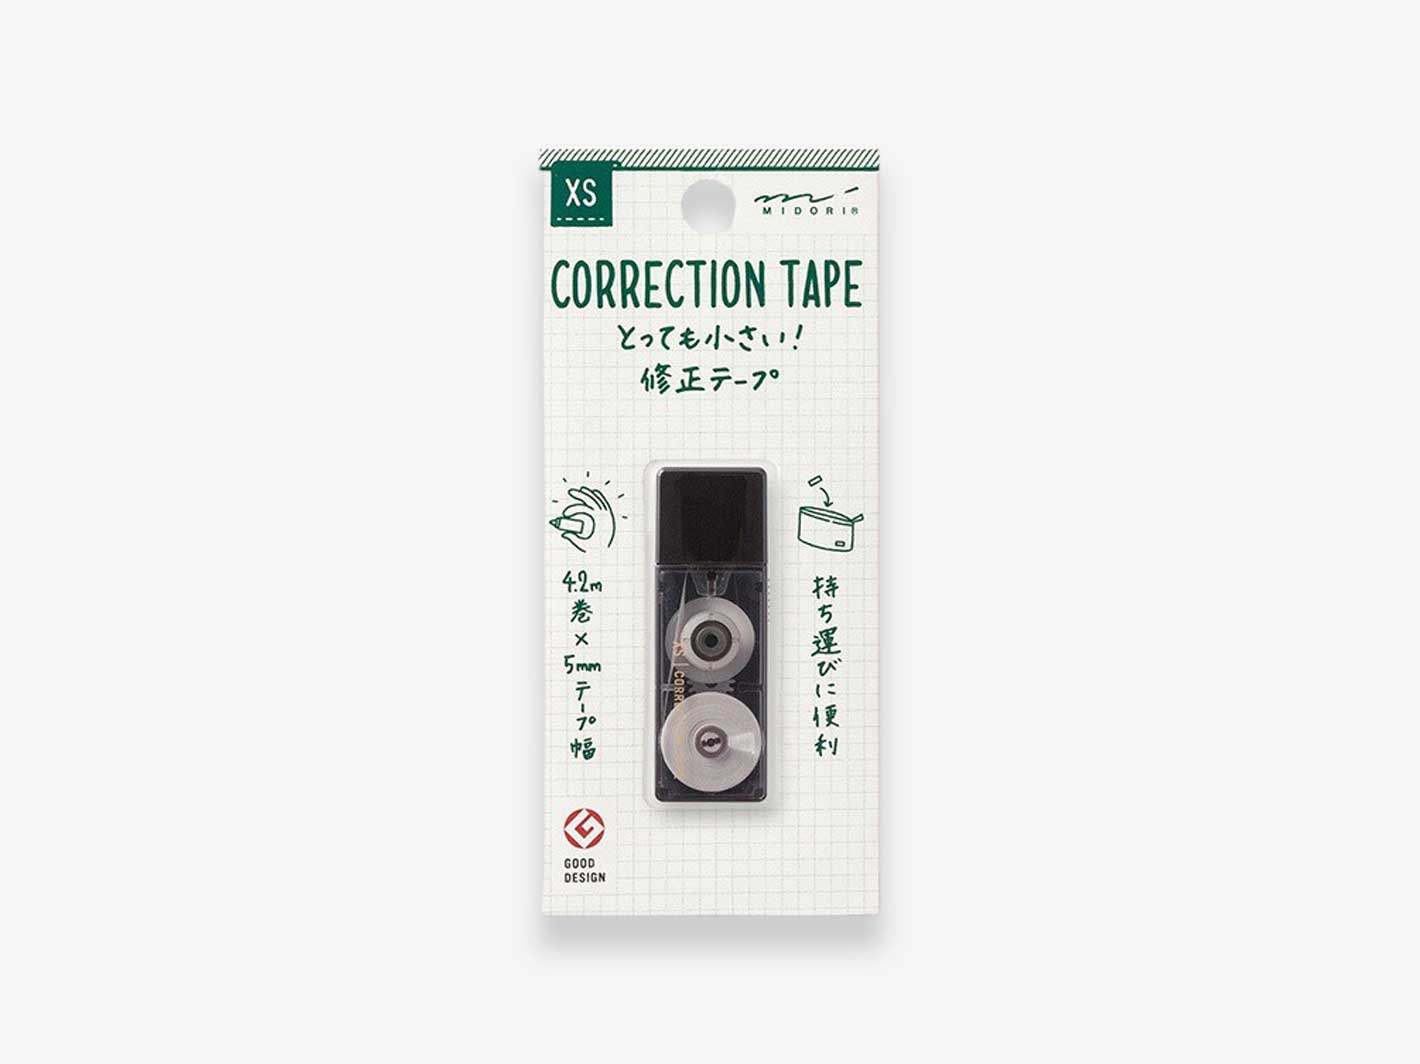 XS Correction Tape